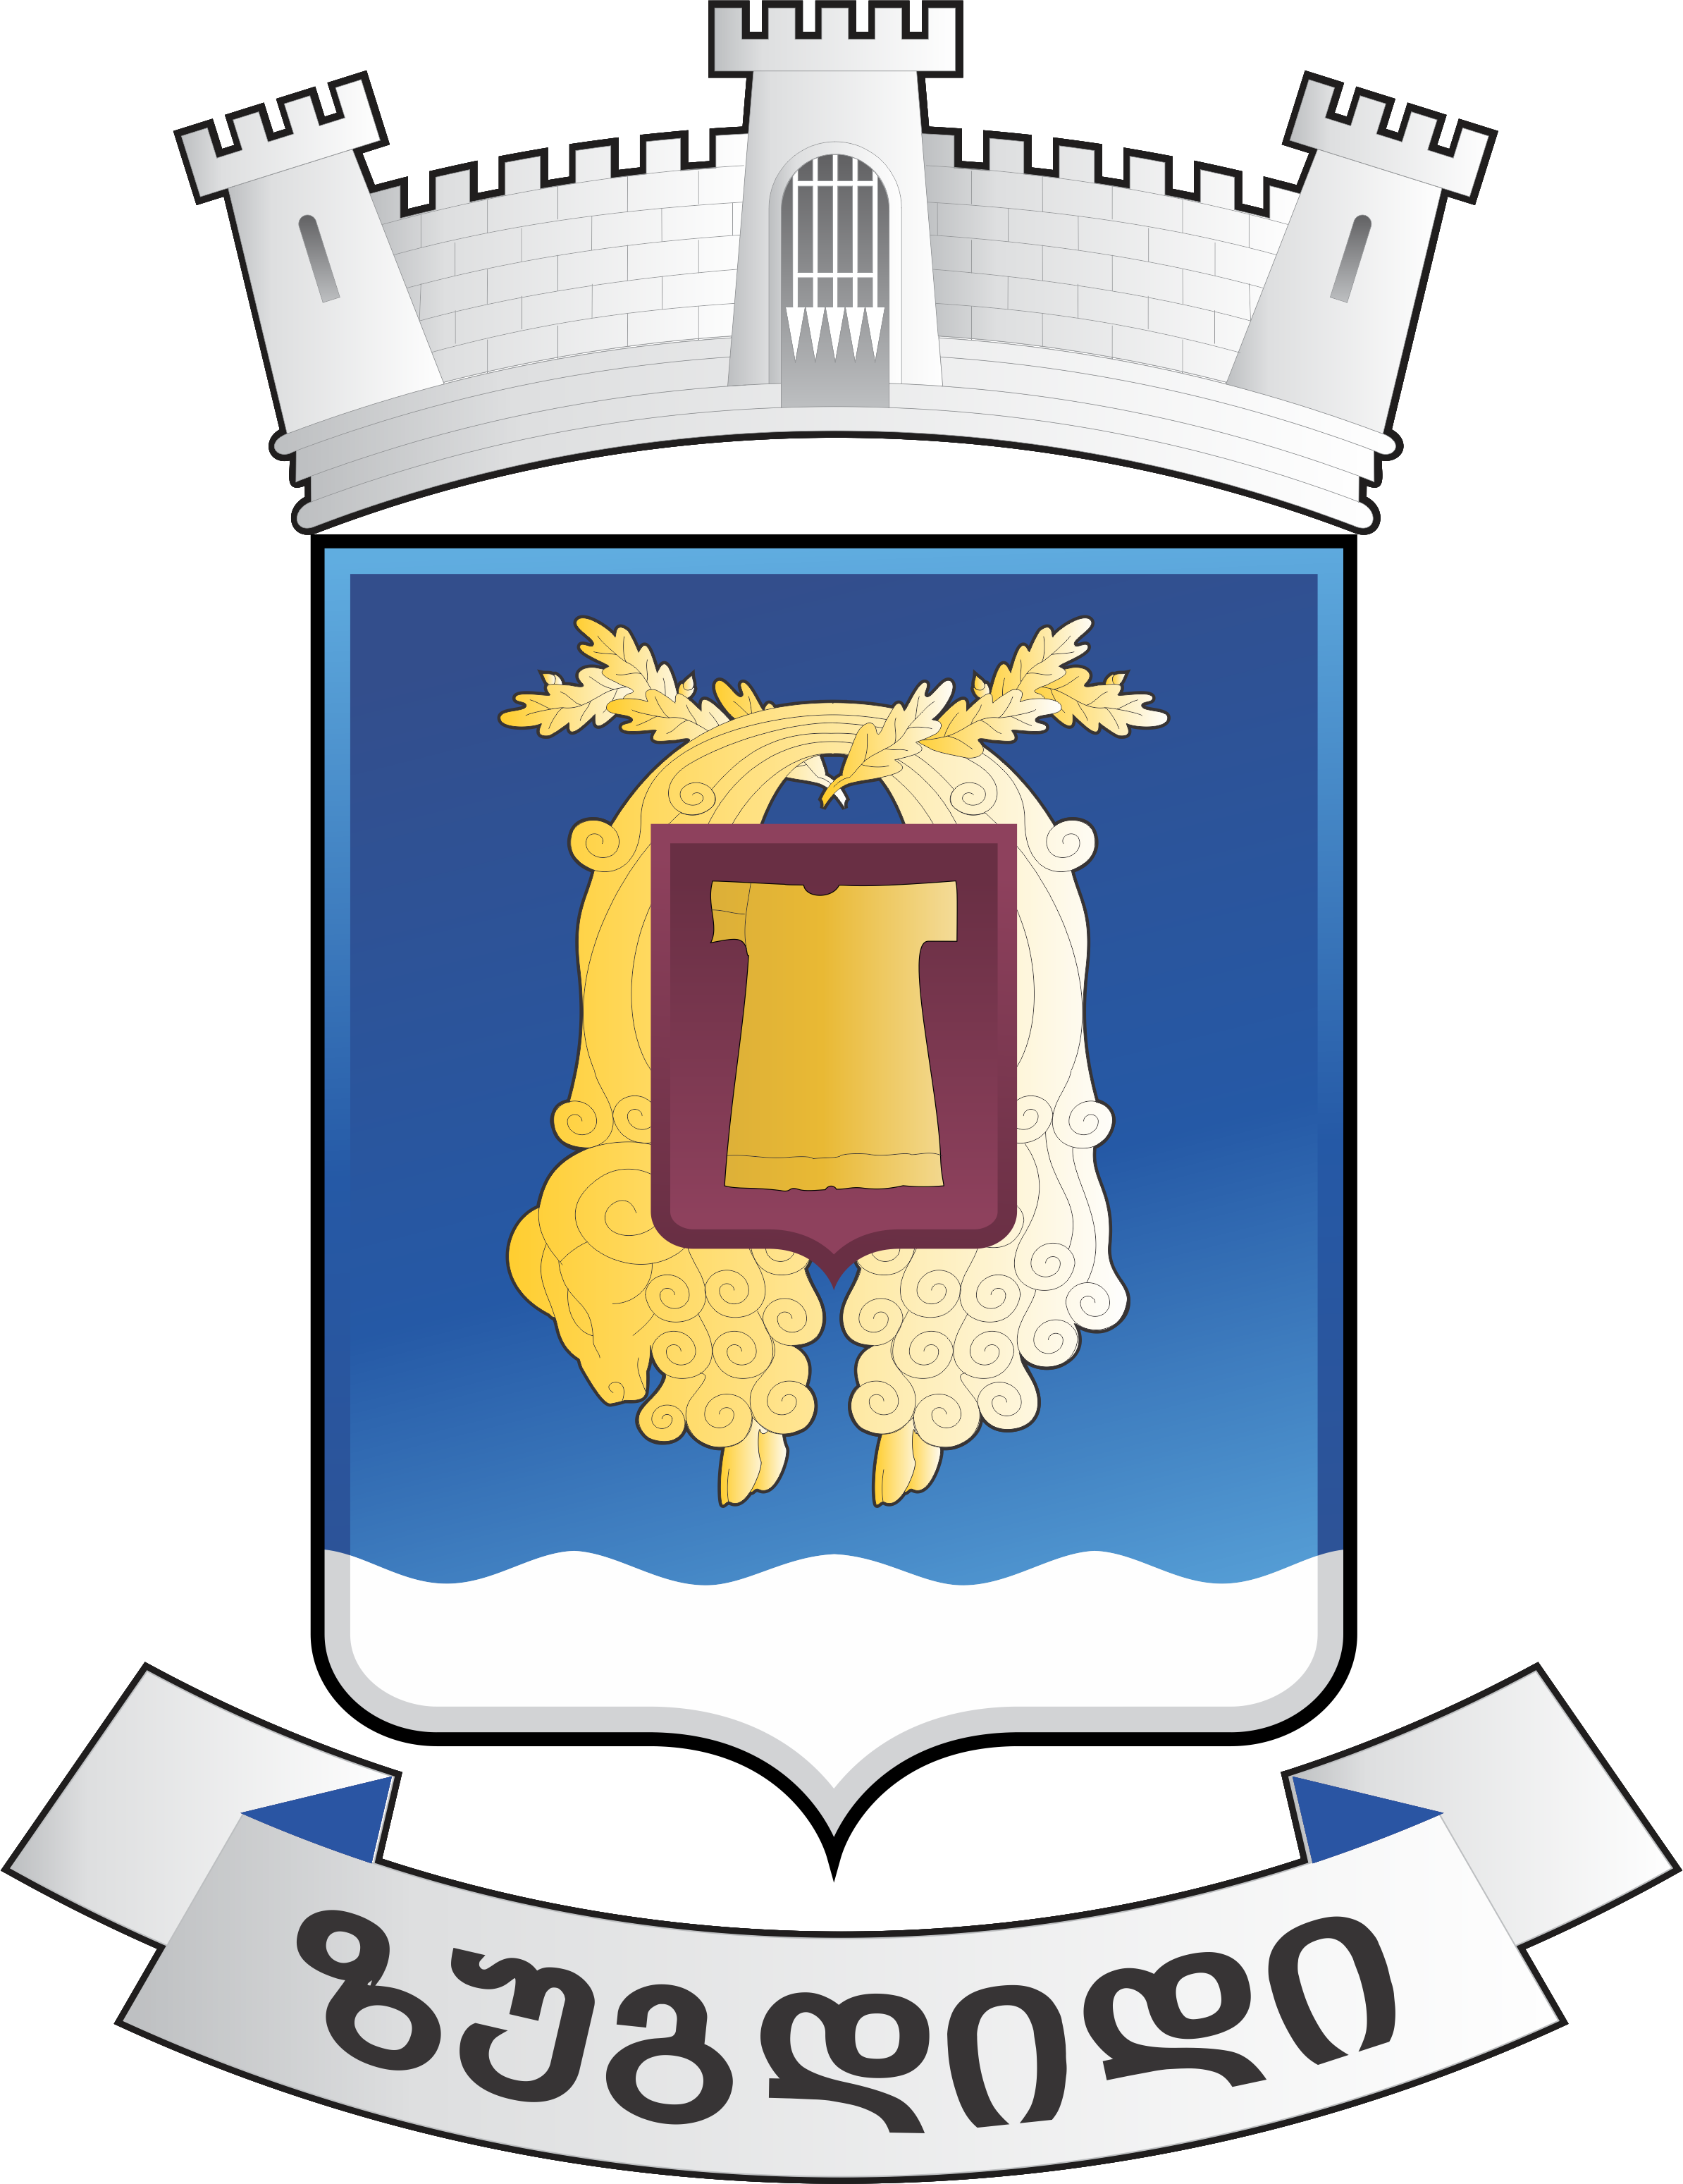 zugdidi.gov.ge logo